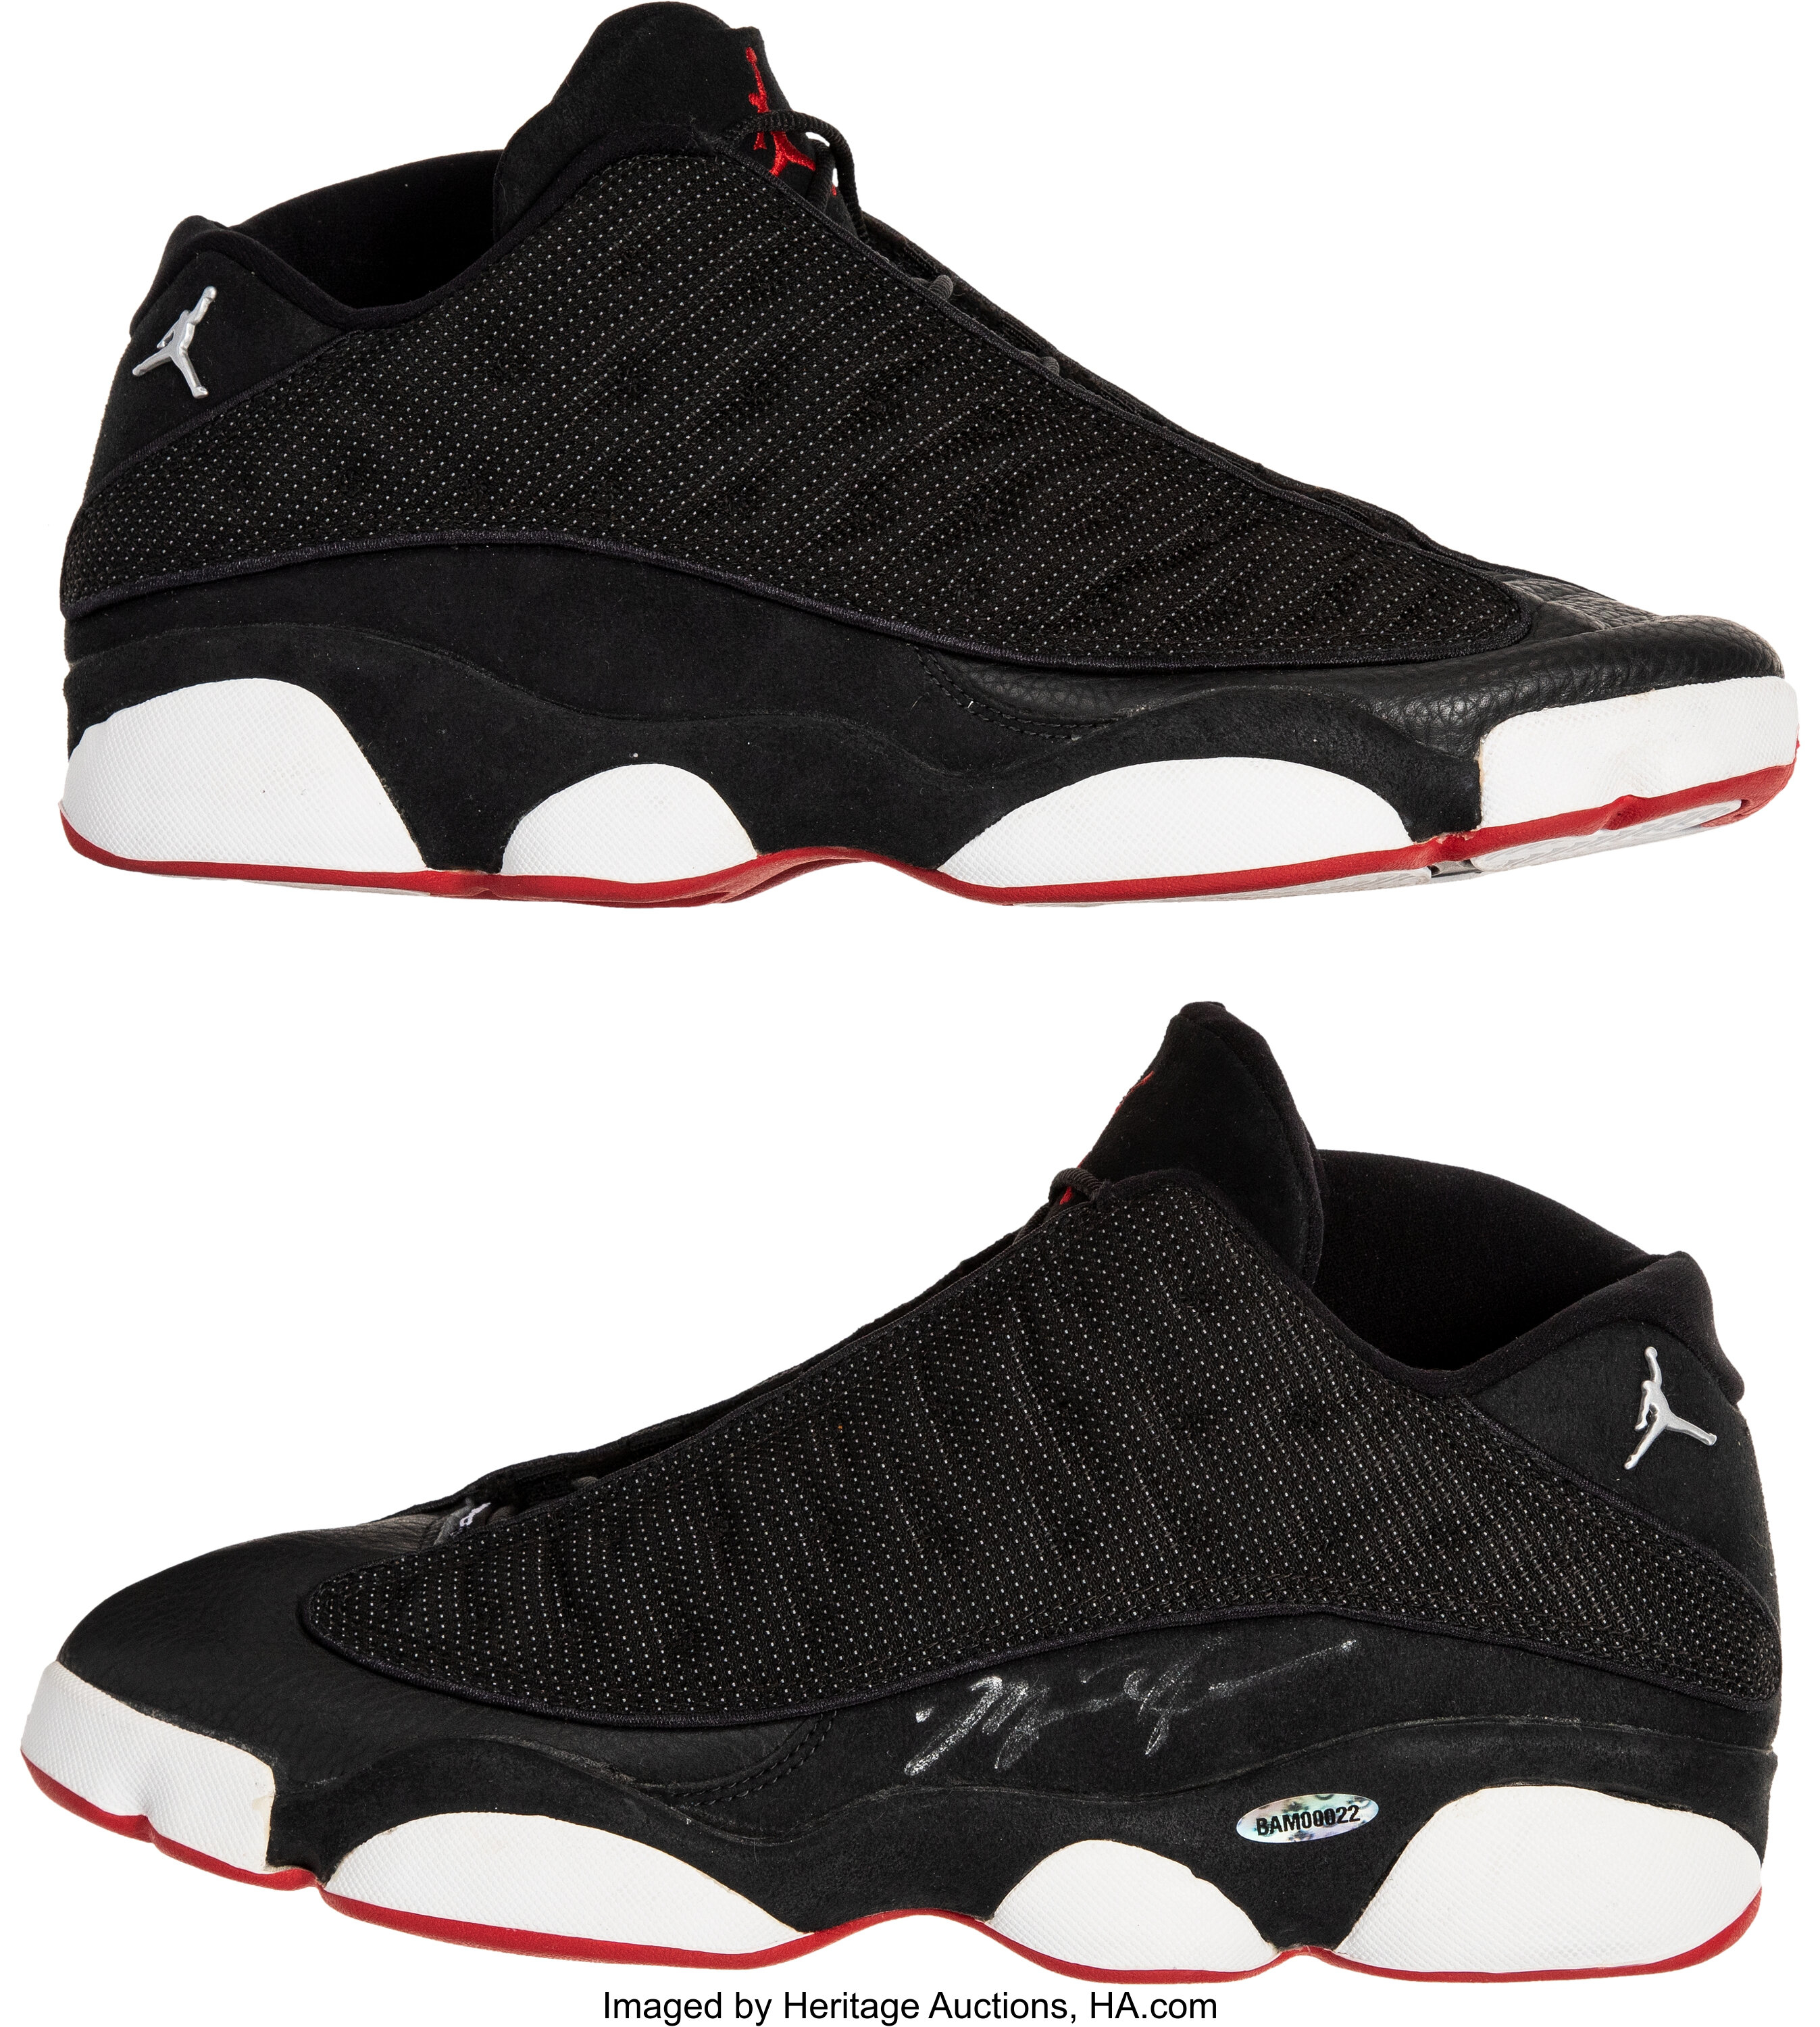 Michael Jordan's sneakers from 1998 'Last Dance' NBA Finals sell